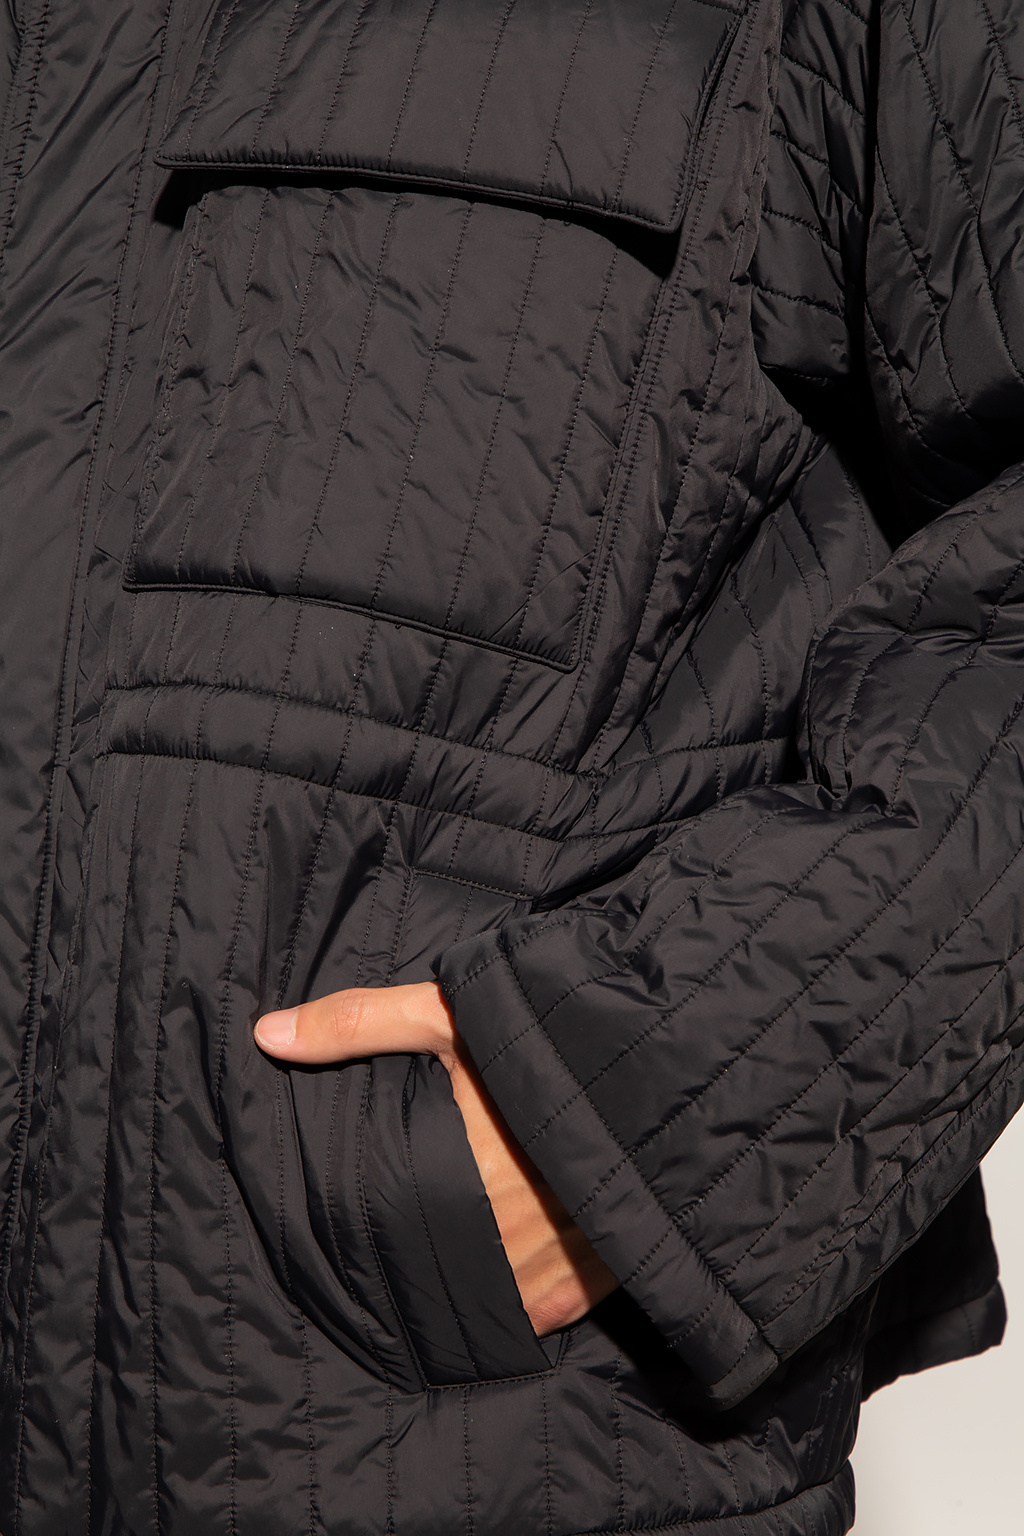 Vivienne Westwood Quilted jacket